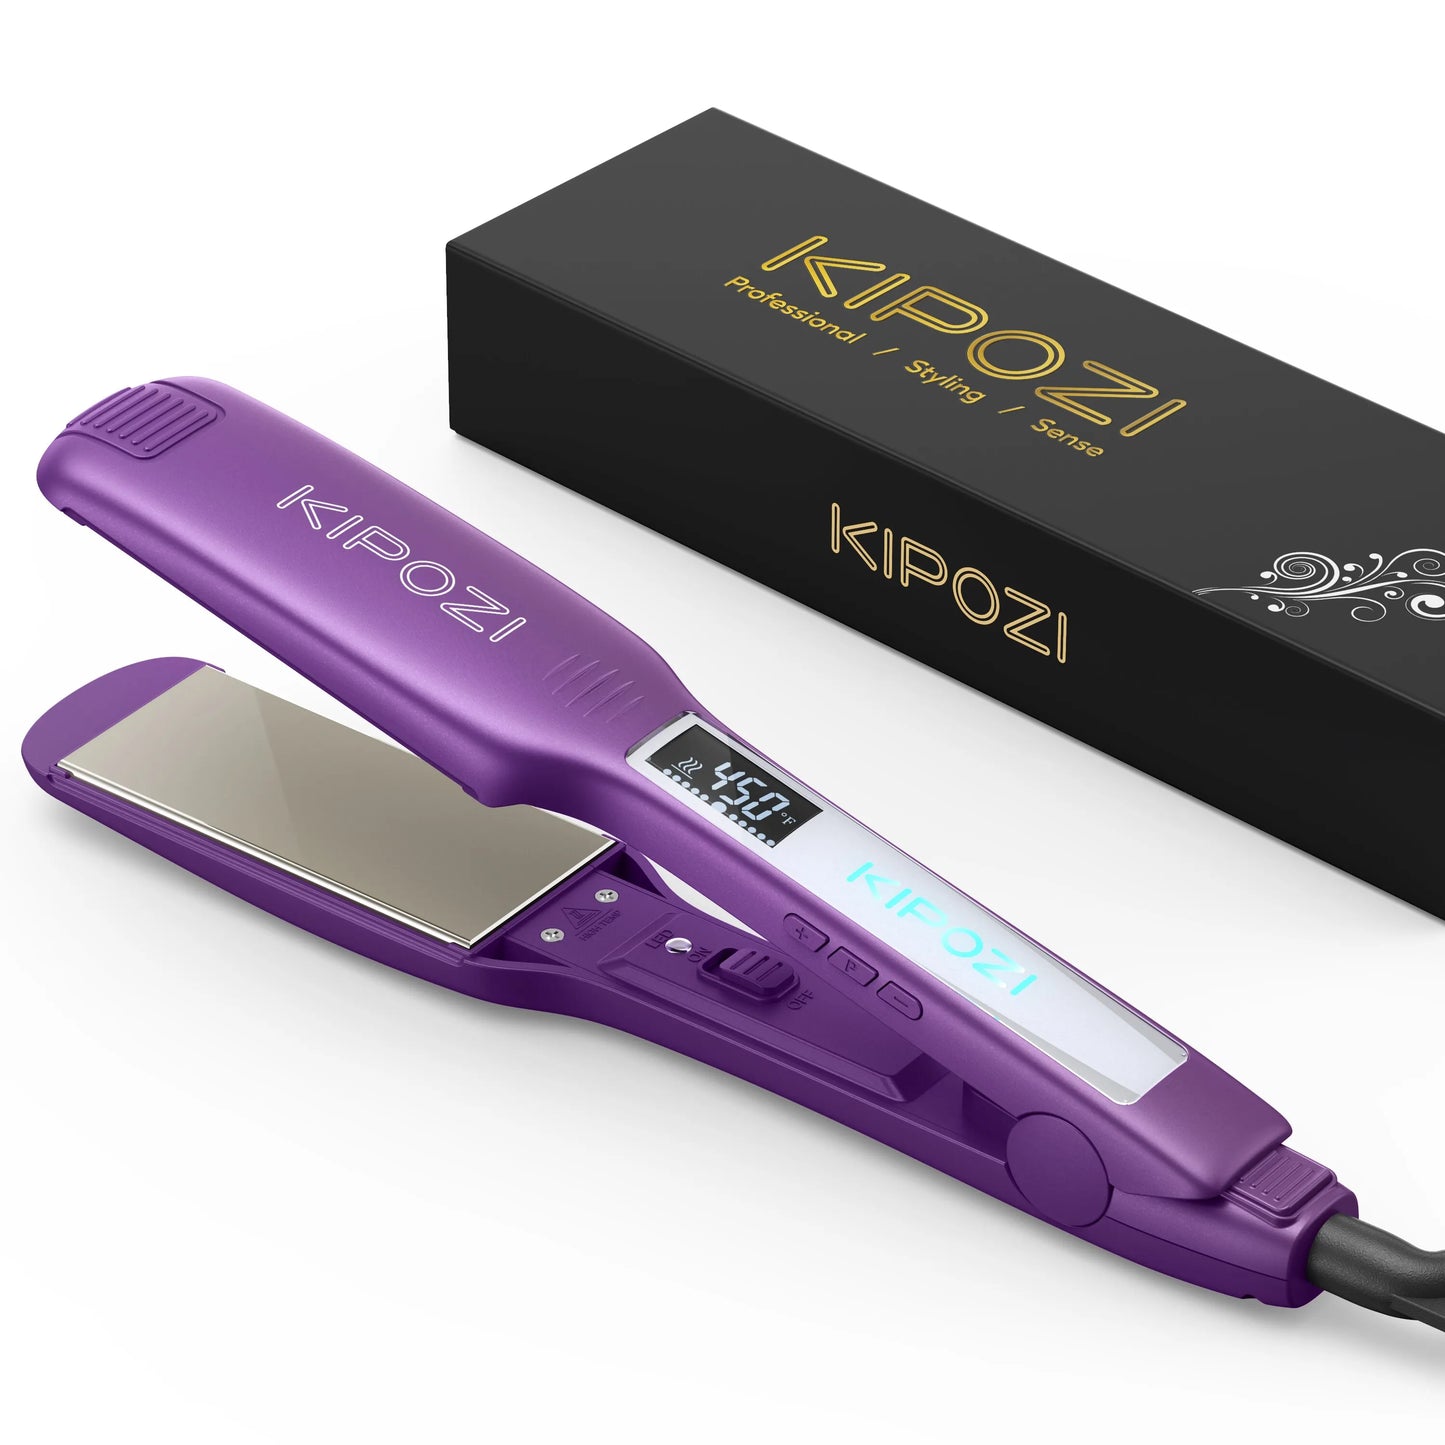 KIPOZI Professional Titanium Flat Iron Hair Straightener - Digital LCD Display, Dual Voltage, Instant Heating & Curling Iron